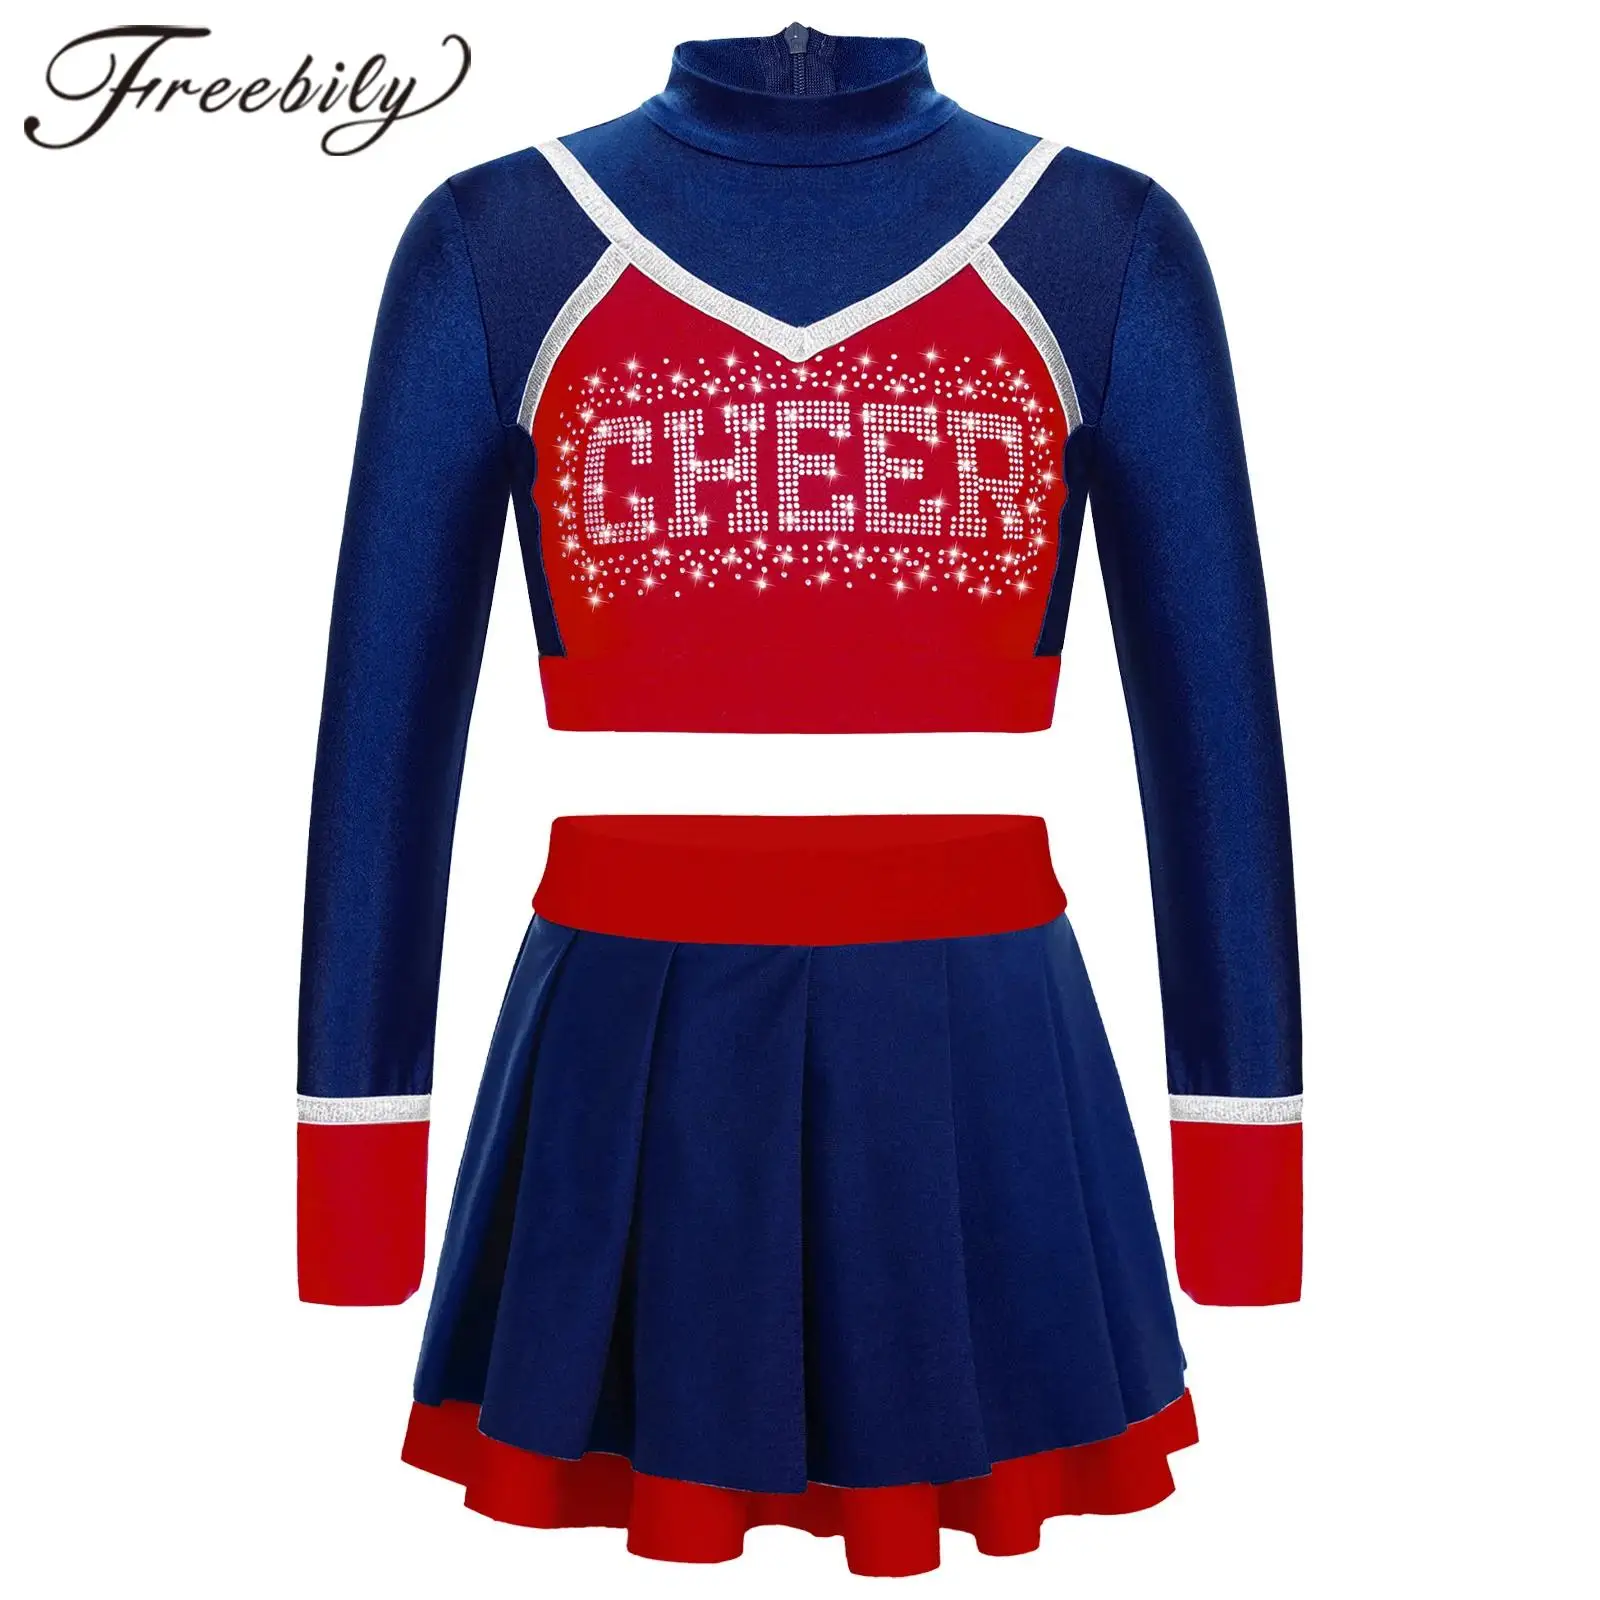 

Kids Cheerleading Dance Outfit School Girls Cheerlead Uniform Long Sleeve Crop Top with Pleated Skirt Teen's Dancewear Teamwear